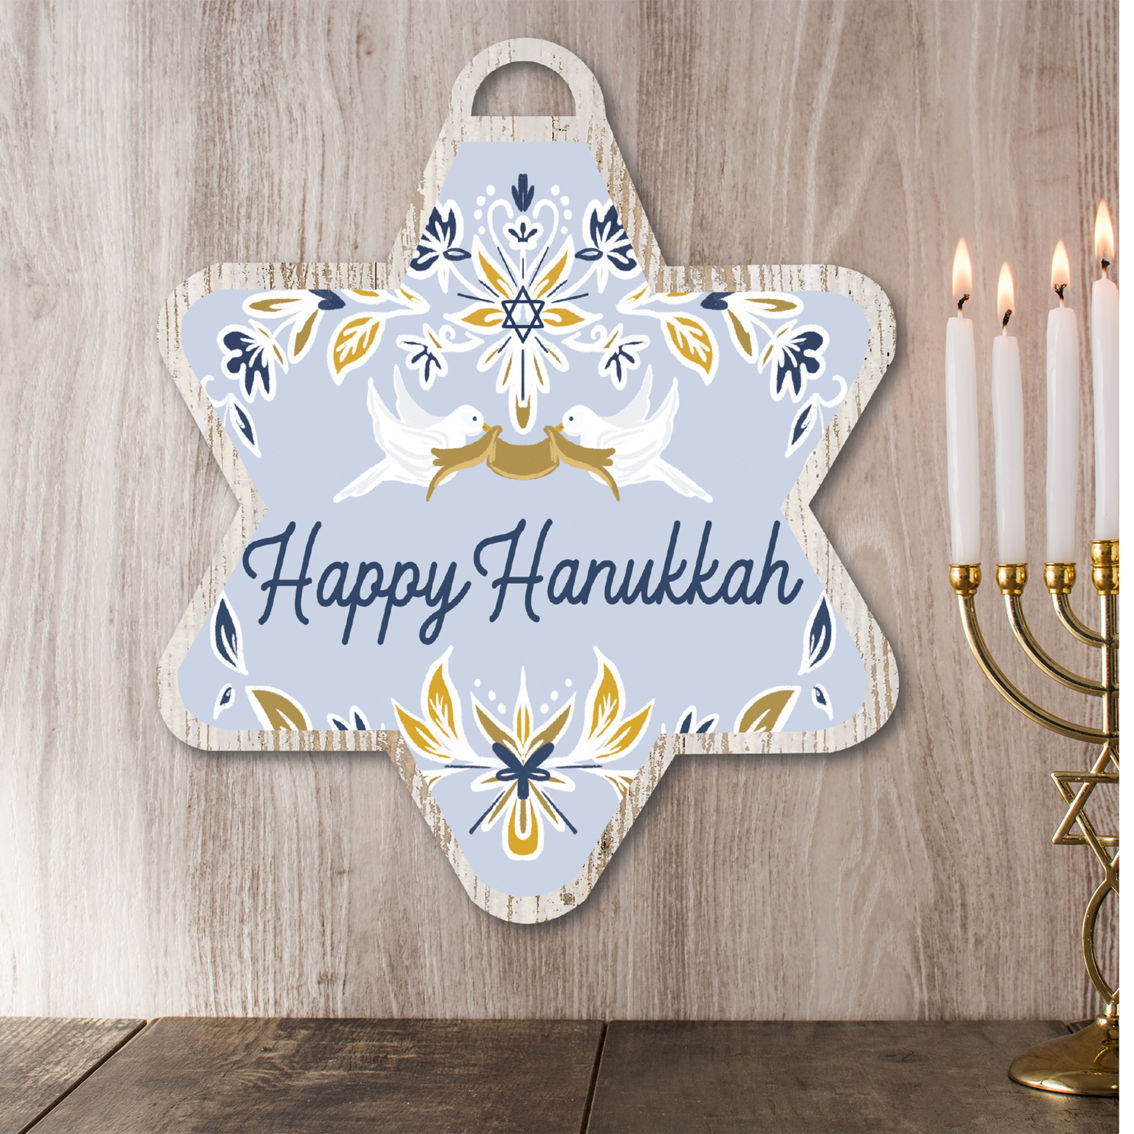 Courtside Market Happy Hanukkah III 12 x 12 in. Ornament Board - Image 2 of 2